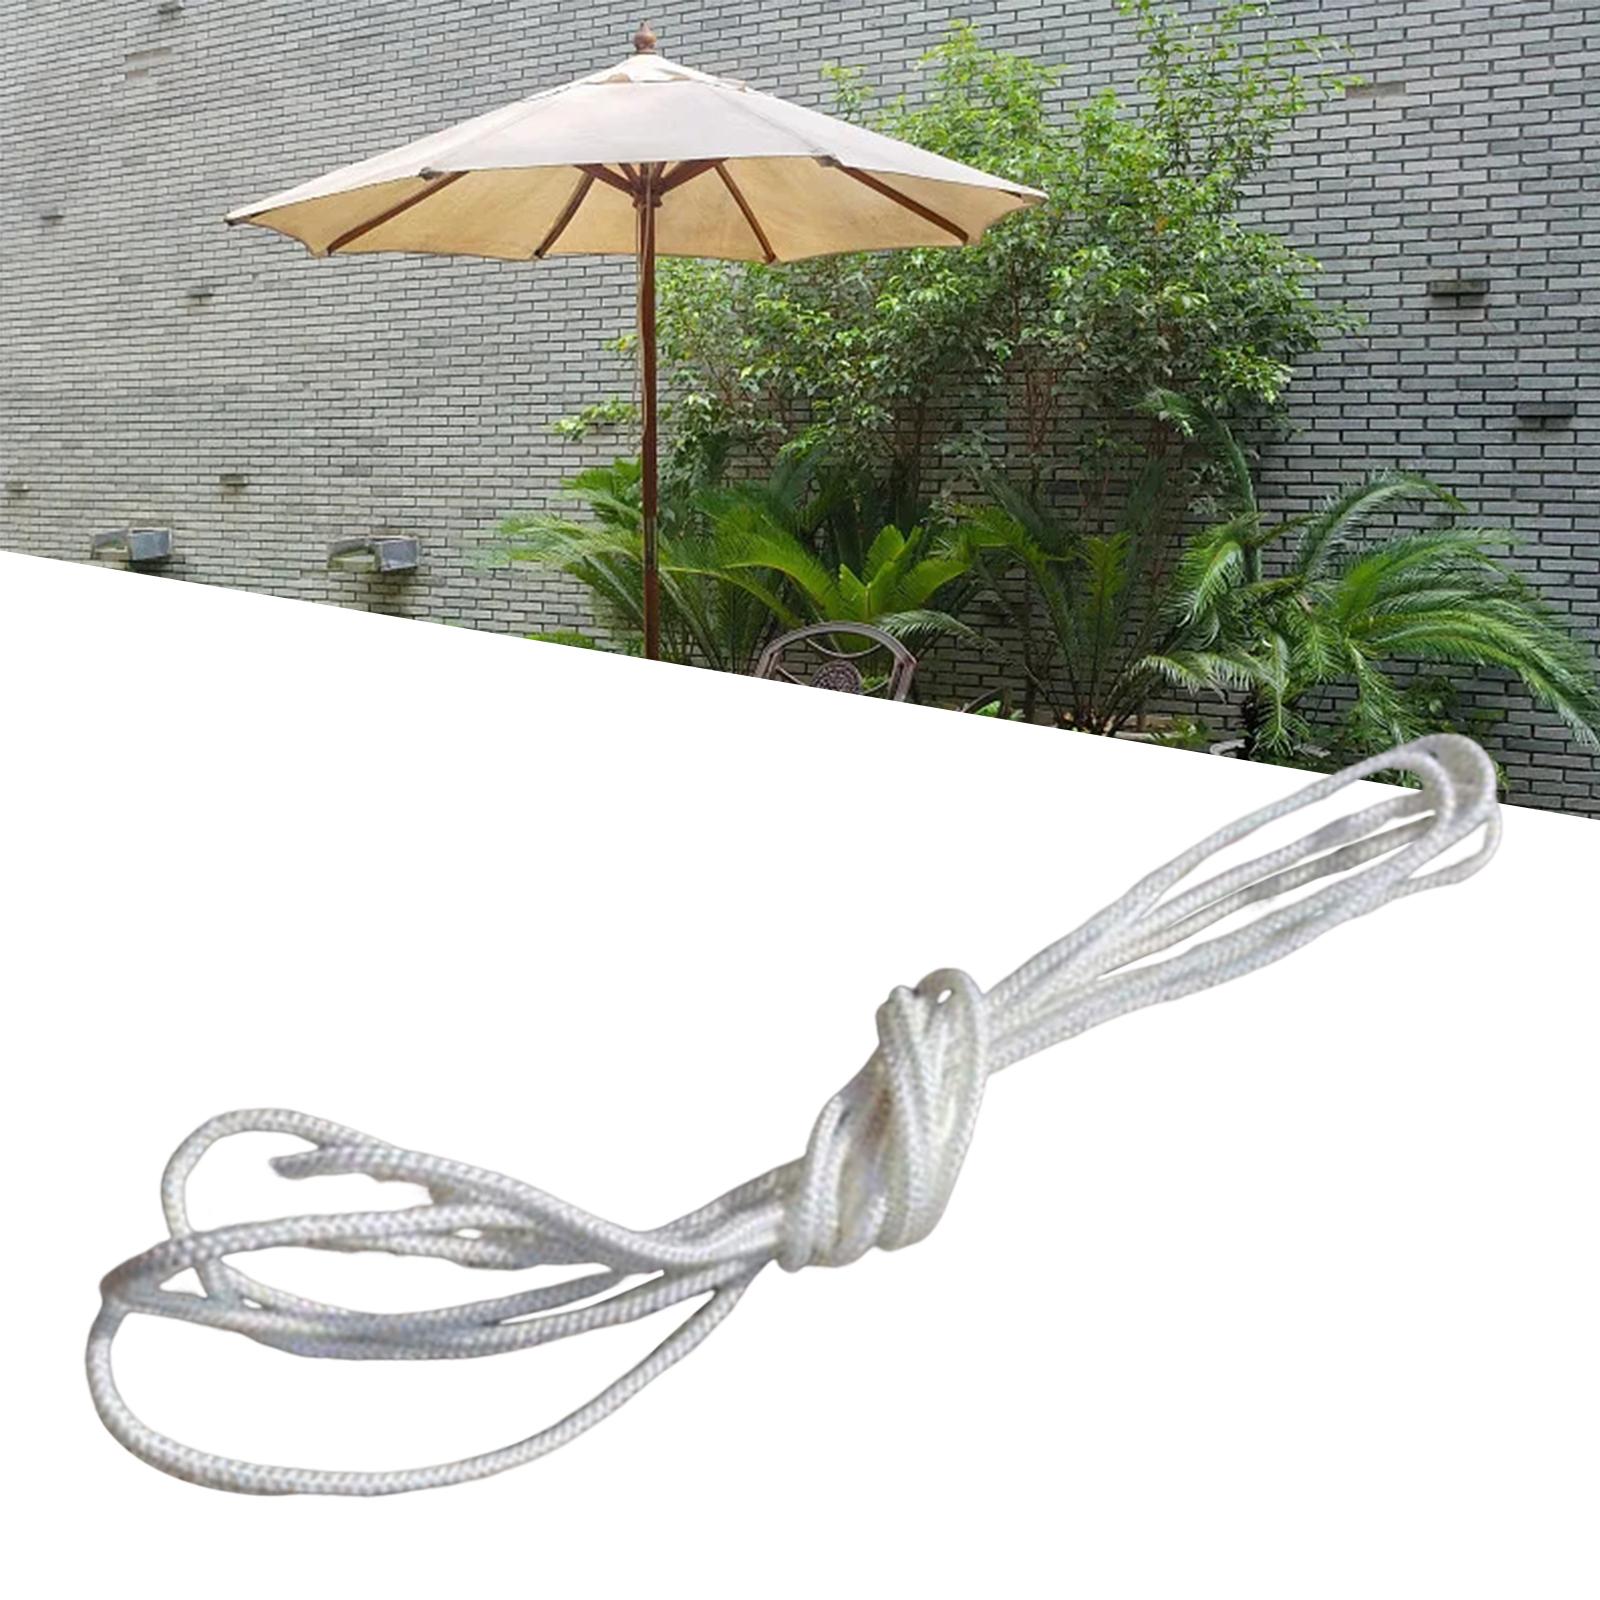 Patio Umbrella Accessories Deck Umbrella Accessories for Balcony Patio Table Patio Umbrella Cord